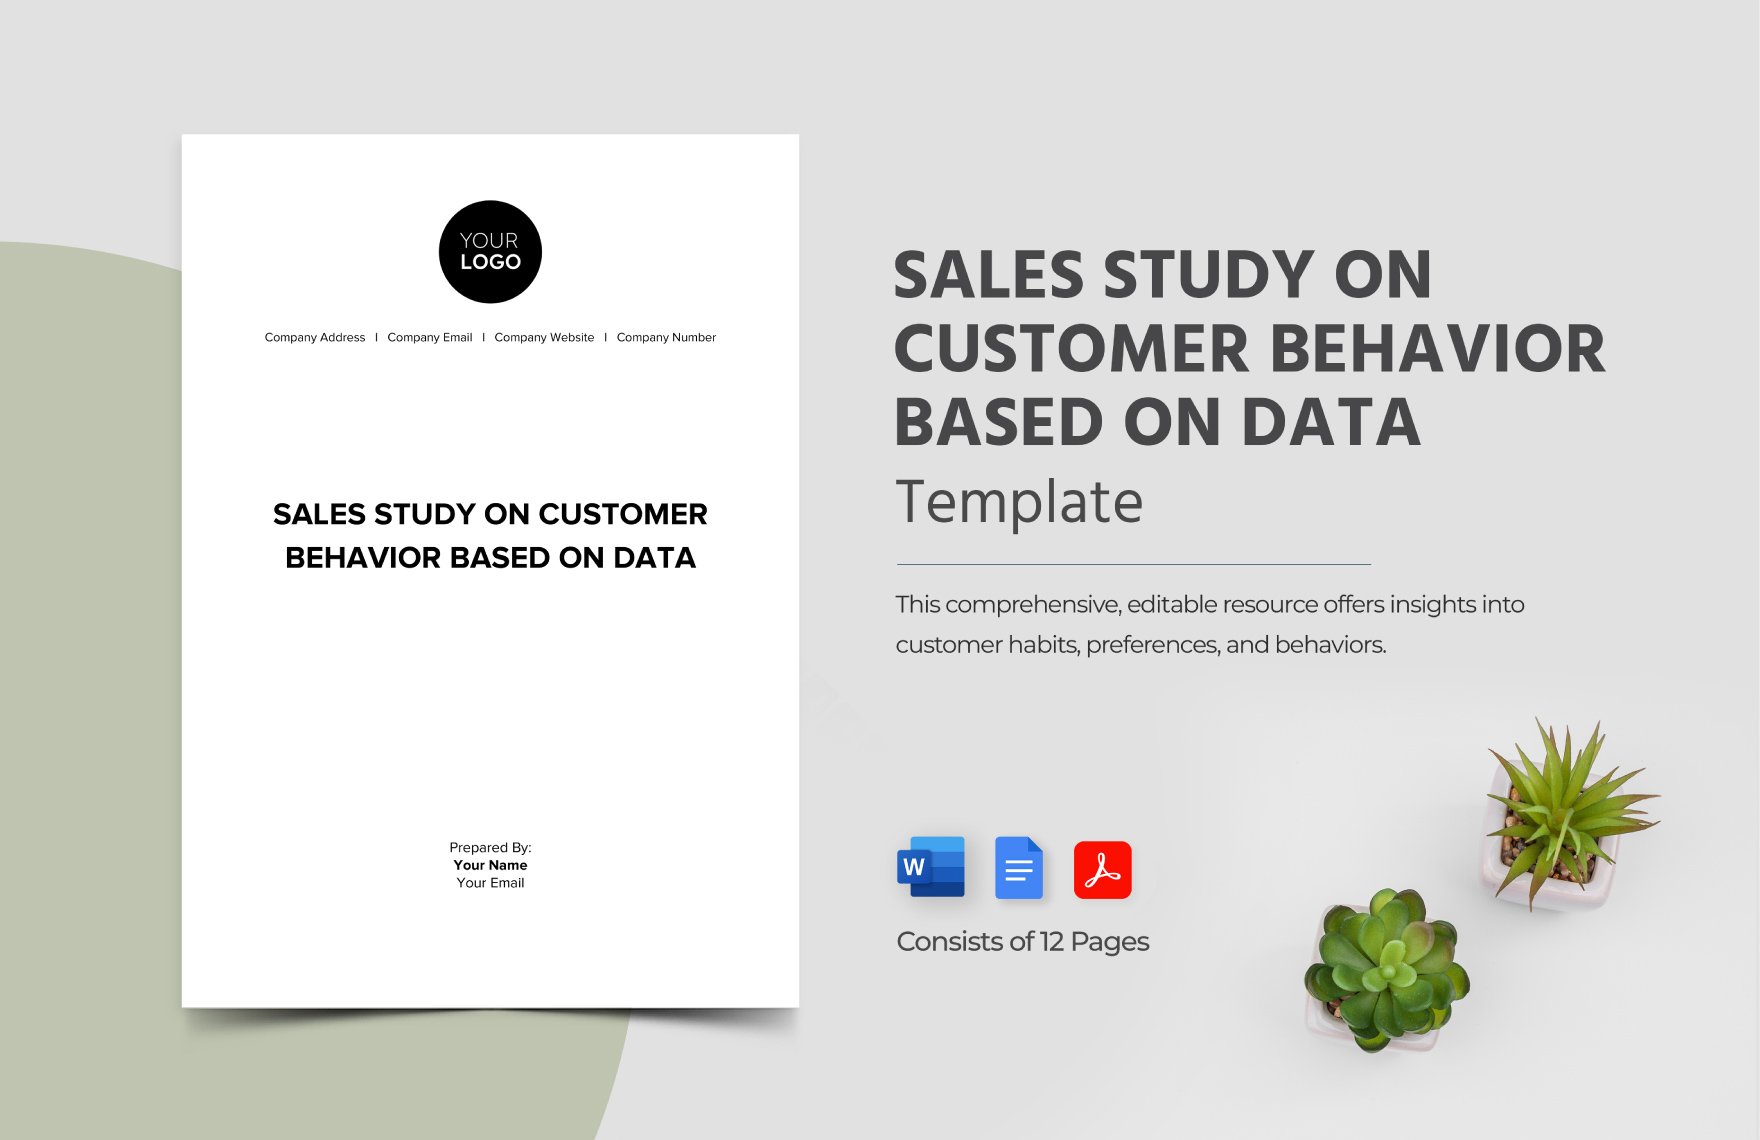 Sales Study on Customer Behavior Based on Data Template